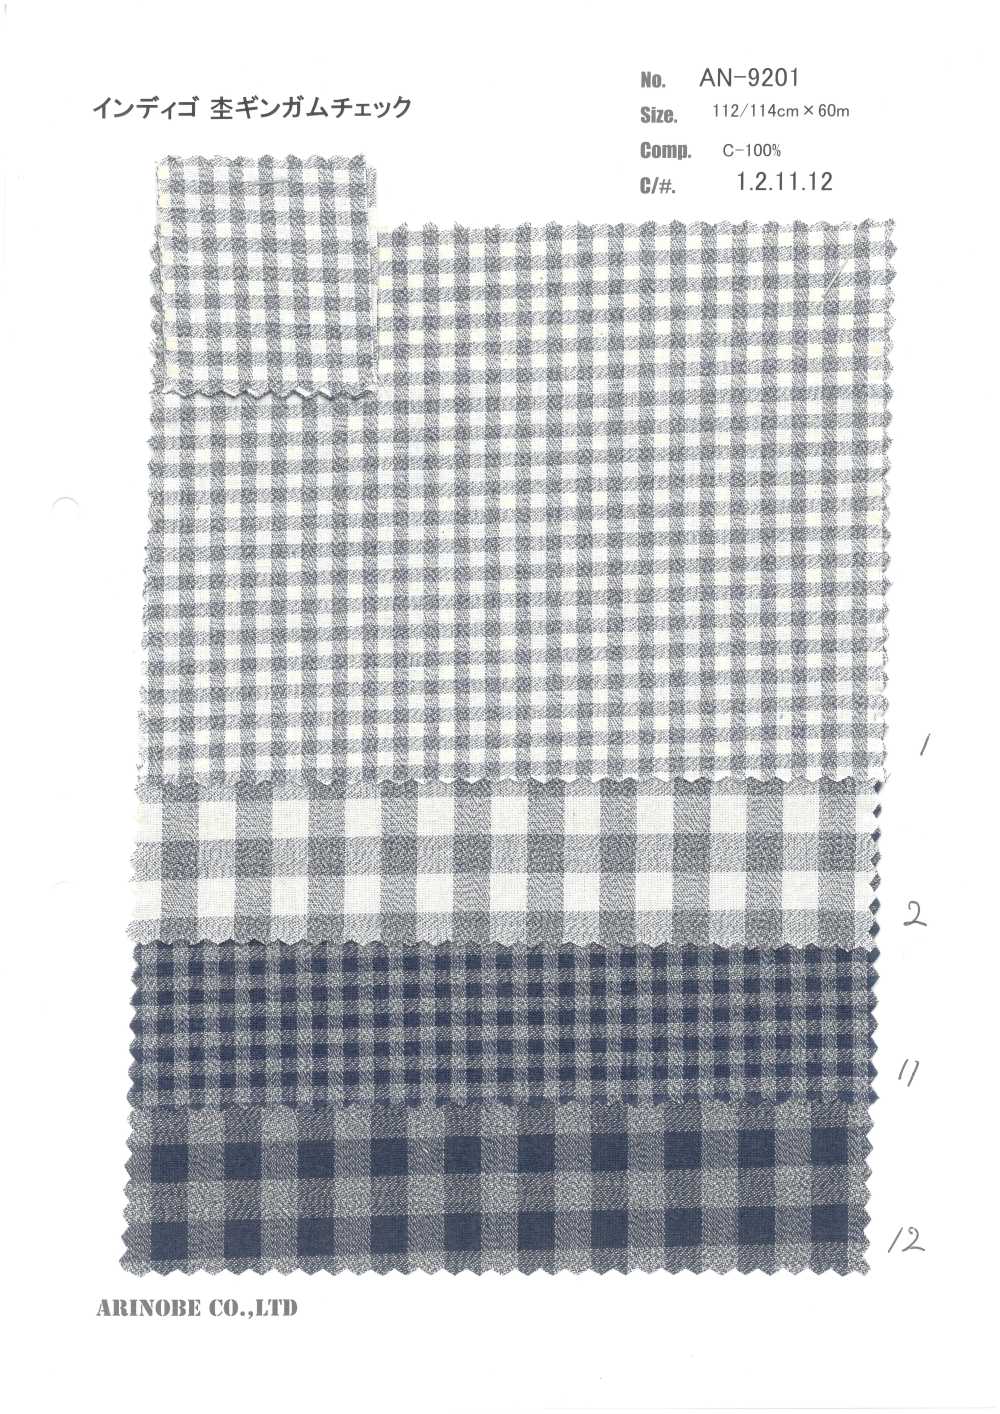 AN-9201 Indigo Heather Gingham Check[Textile / Fabric] ARINOBE CO., LTD.